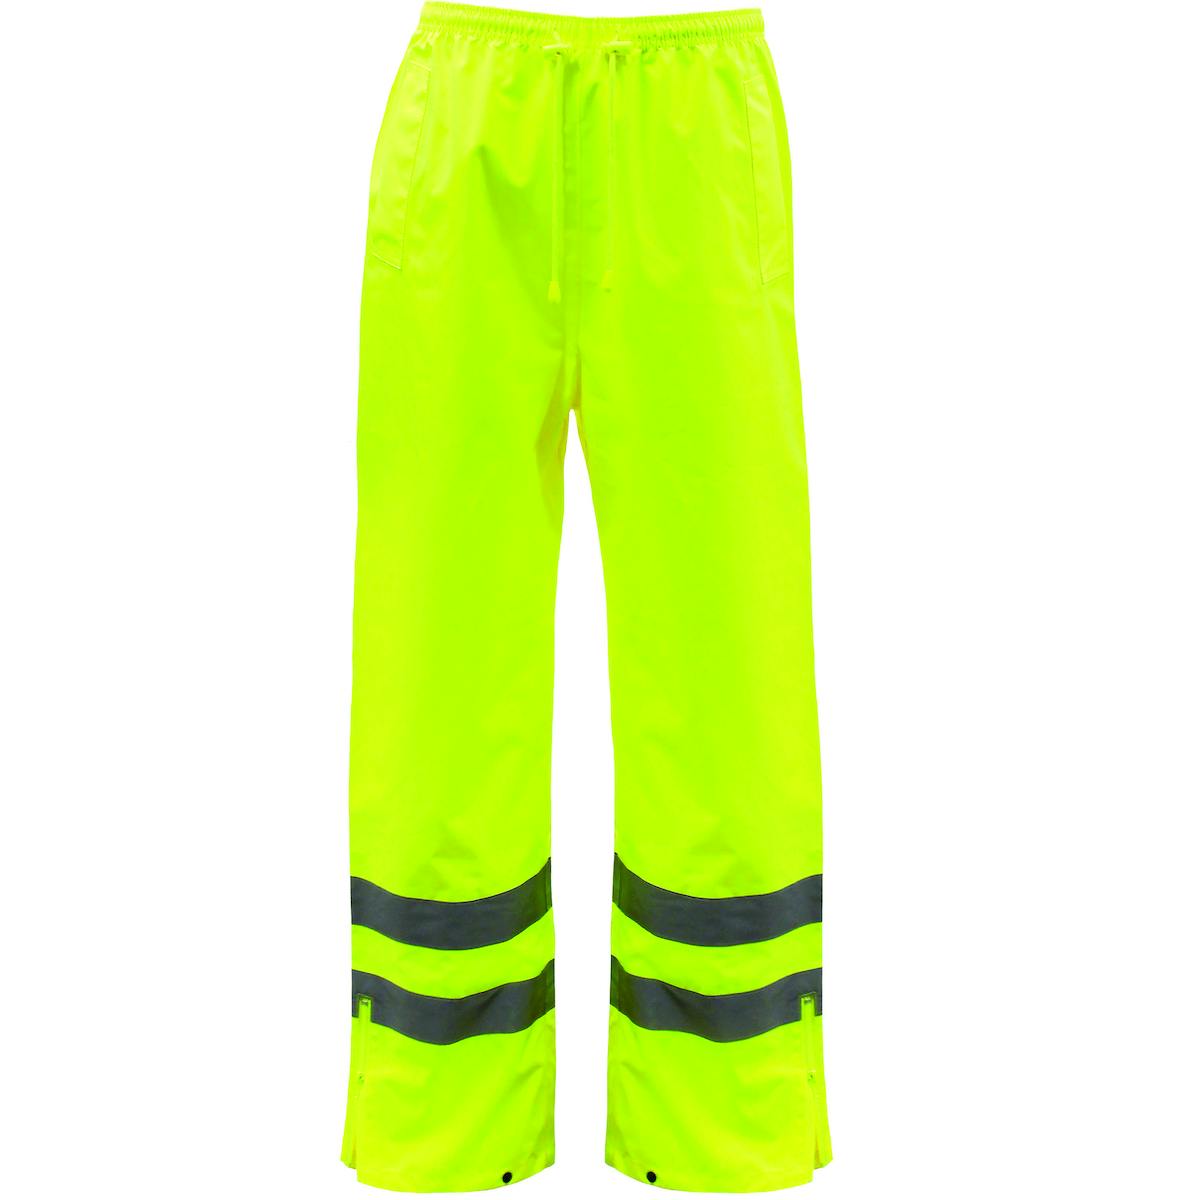 ANSI Class E Heavy Duty Waterproof Breathable Pants, Hi-Vis Yellow (3NR3000)